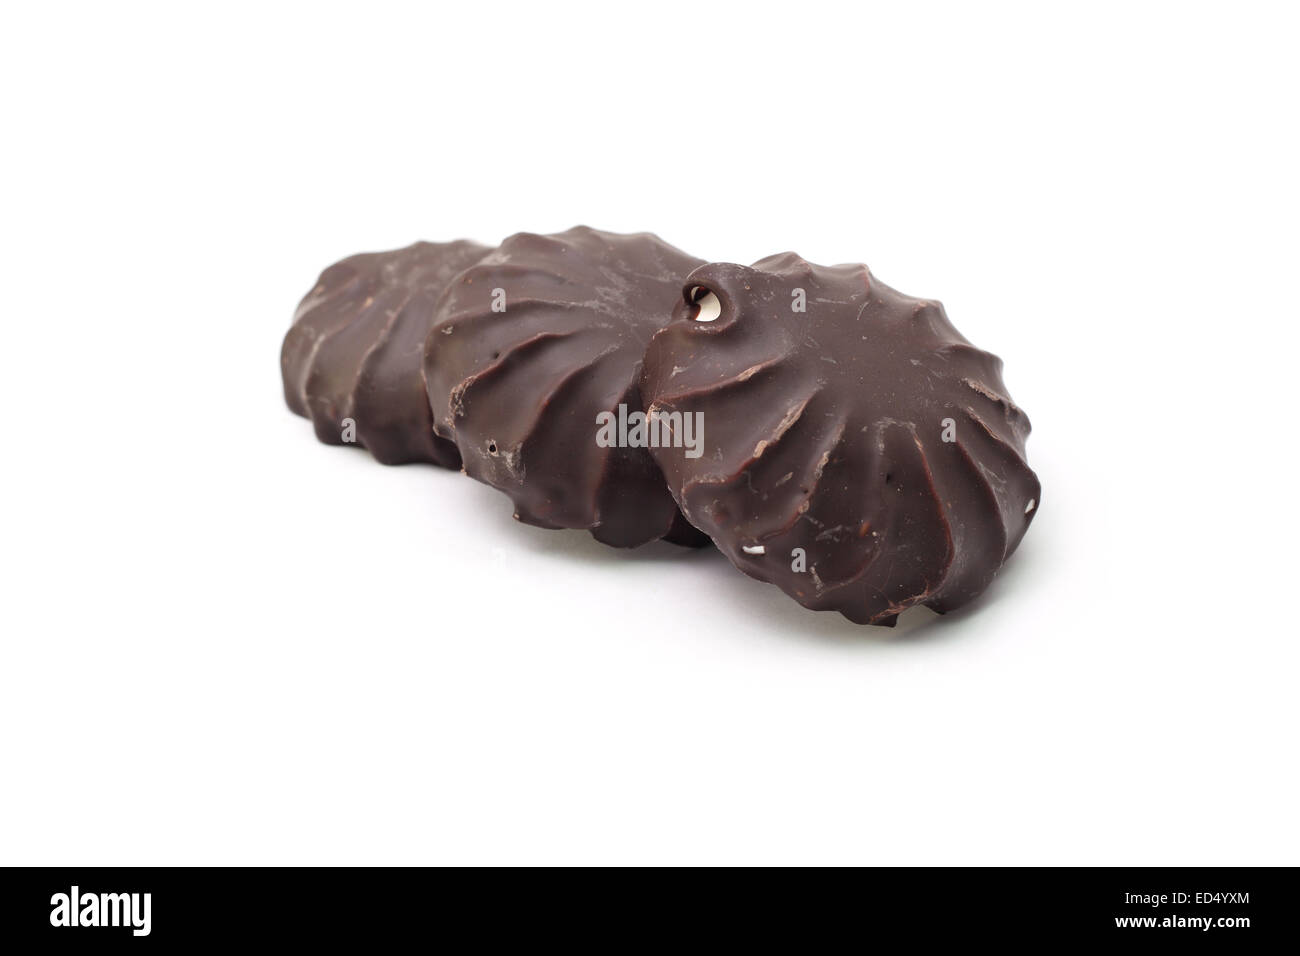 Chocolate Covered Marshmallow. Isolated on white background Stock Photo